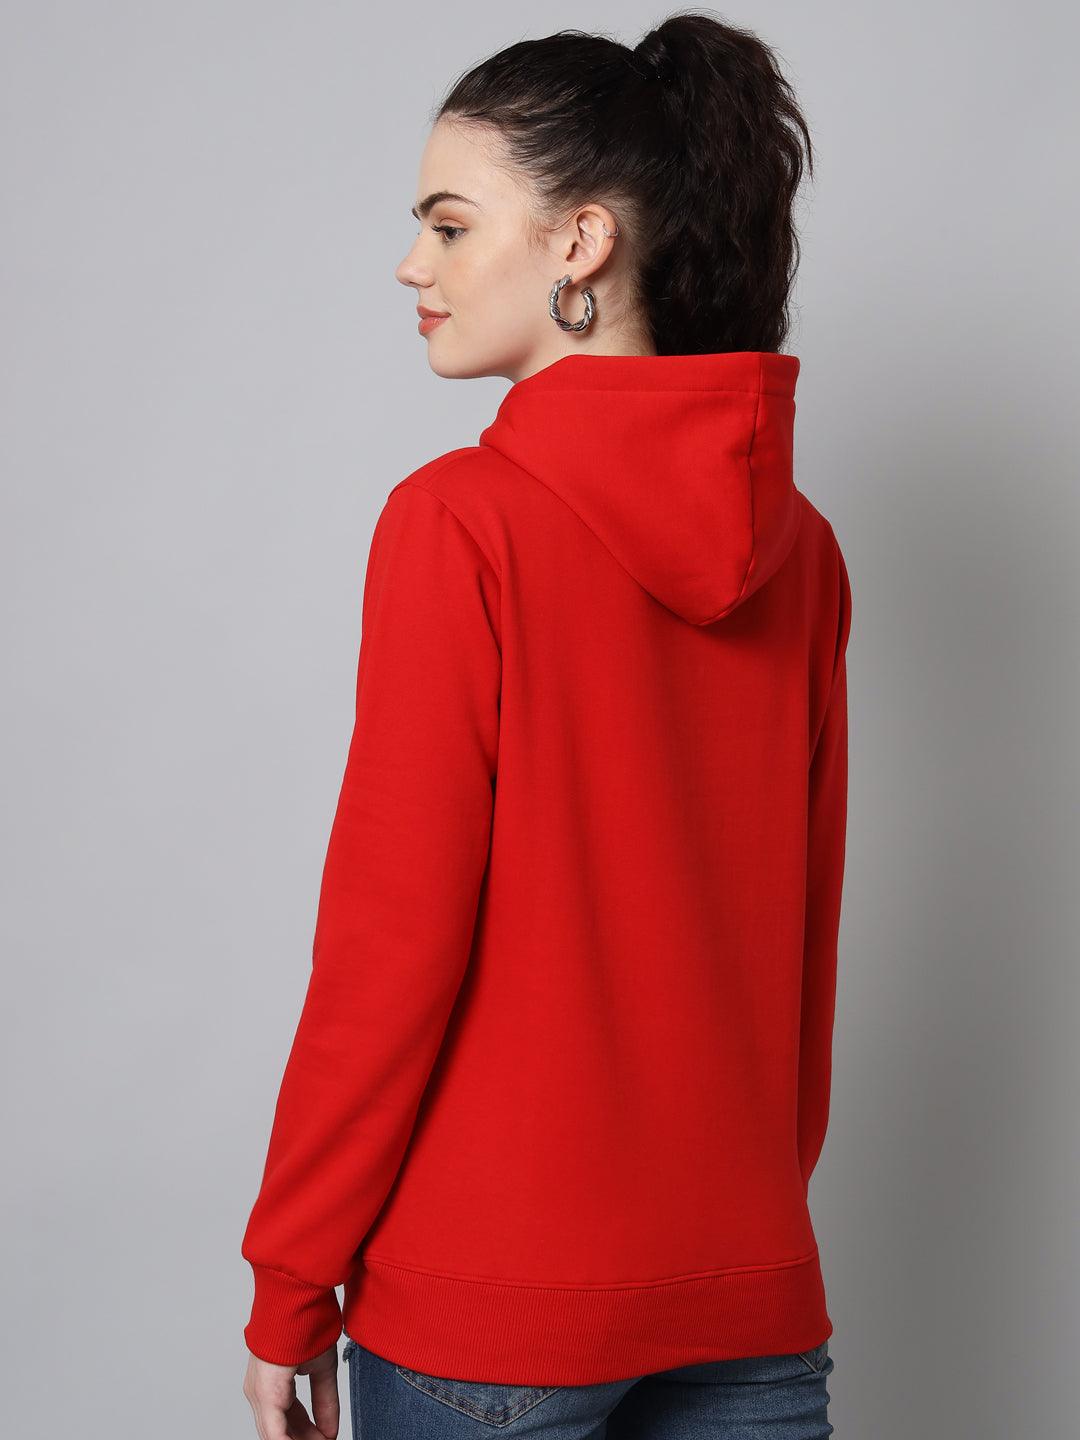 Griffel Women’s Cotton Fleece Full Sleeve Red Hoodie Sweatshirt - griffel